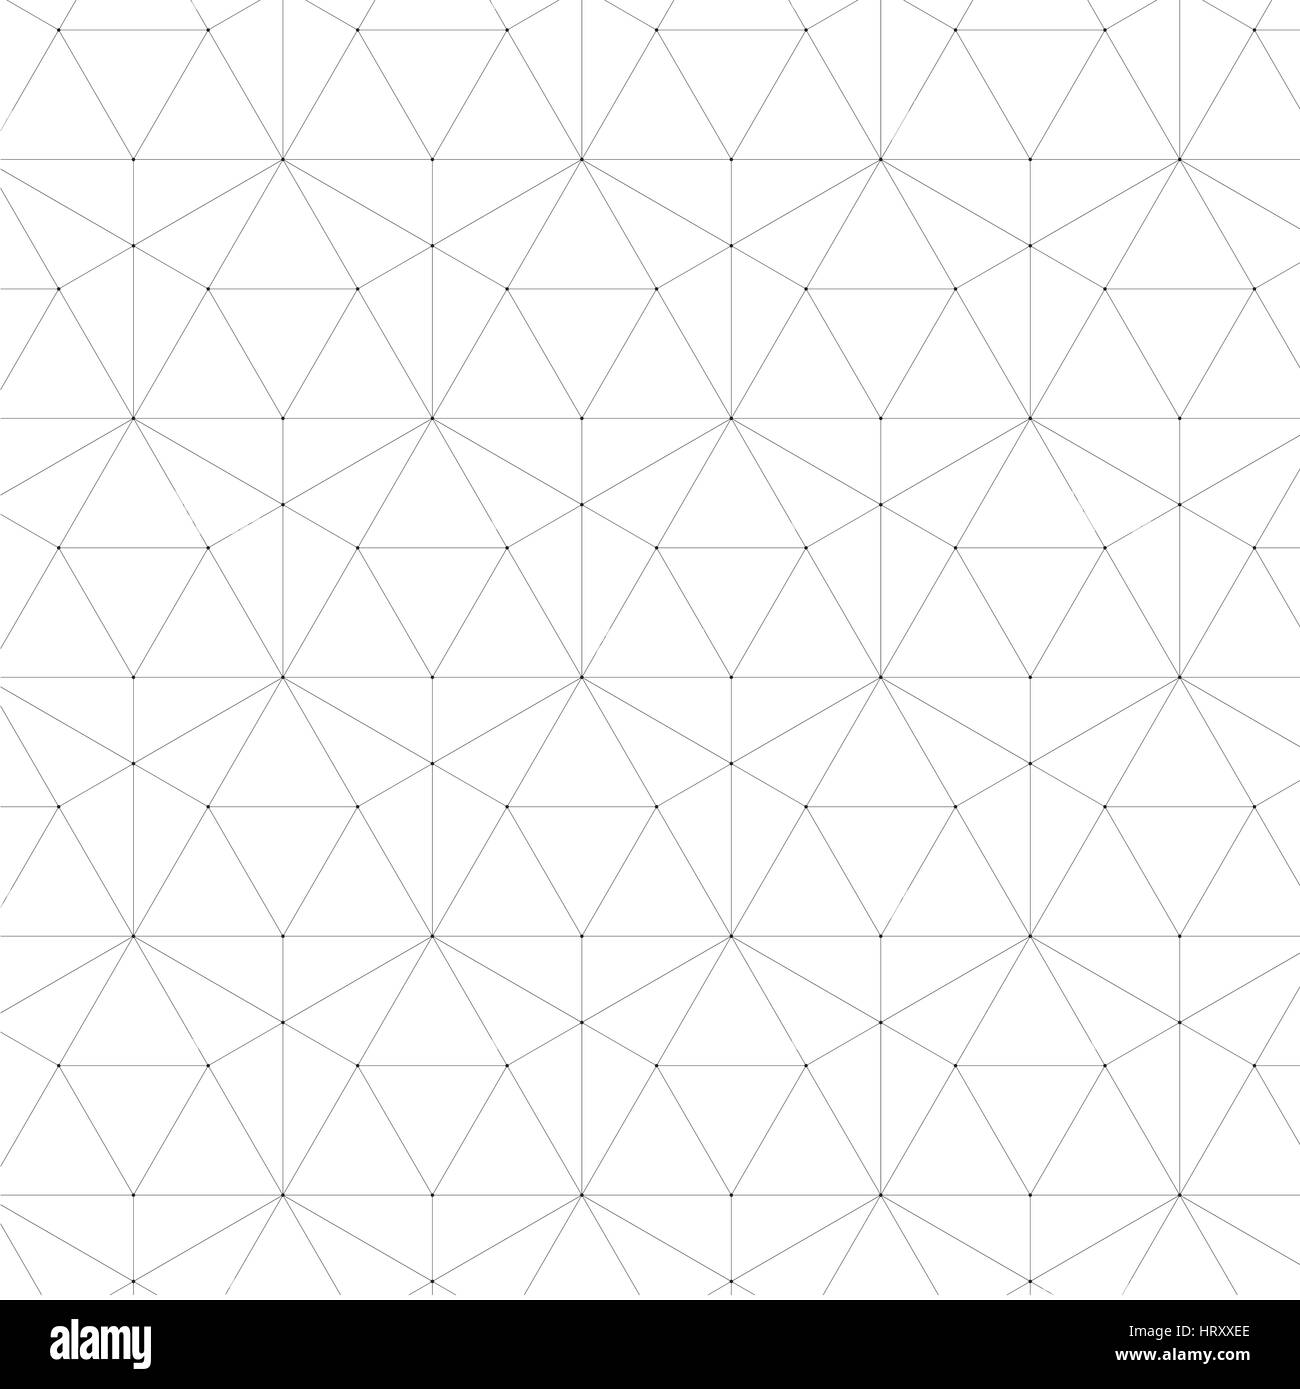 Geometric design shape on white background. Tiles pattern. Stock Photo